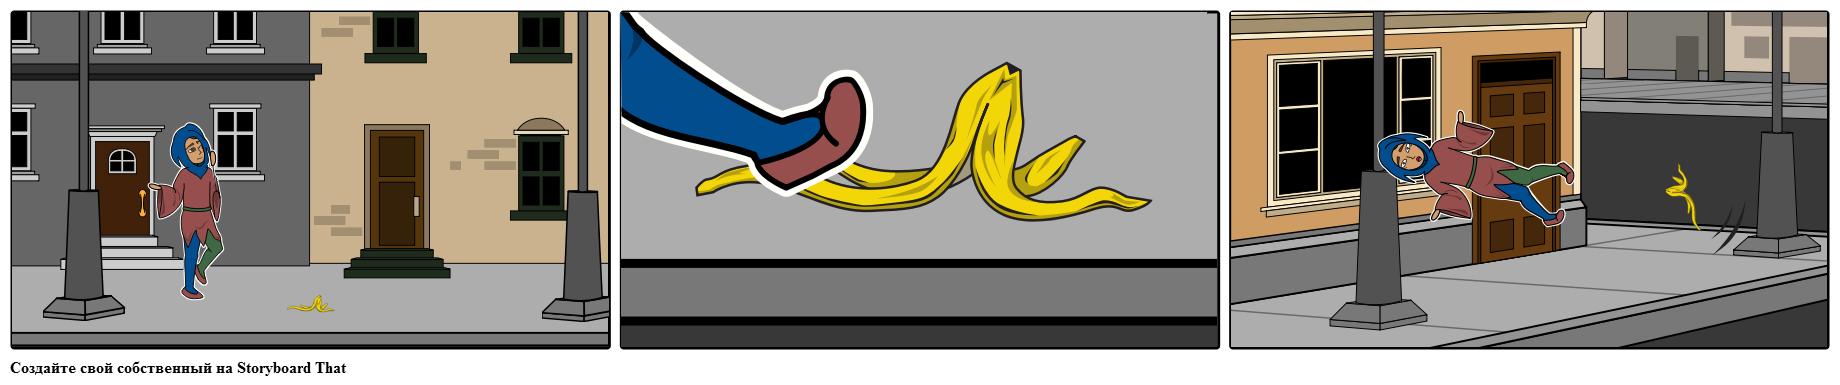 Шут проскальзывает на кожуру банана